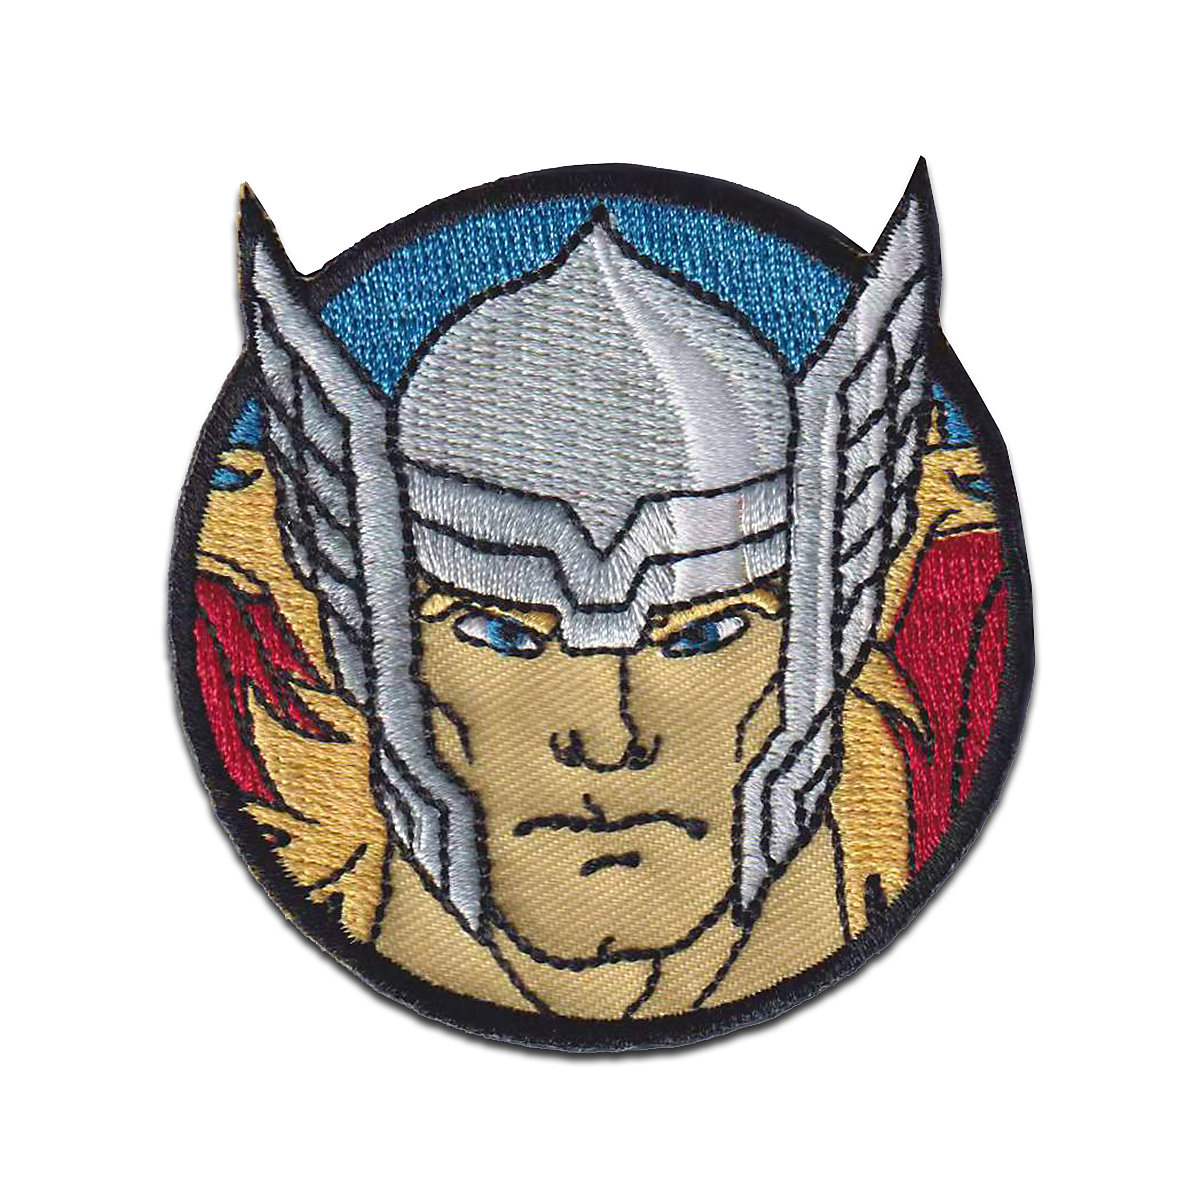 Aufnäher / Bügelbild Marvel Avengers Thor Button Nähsets für Kinder